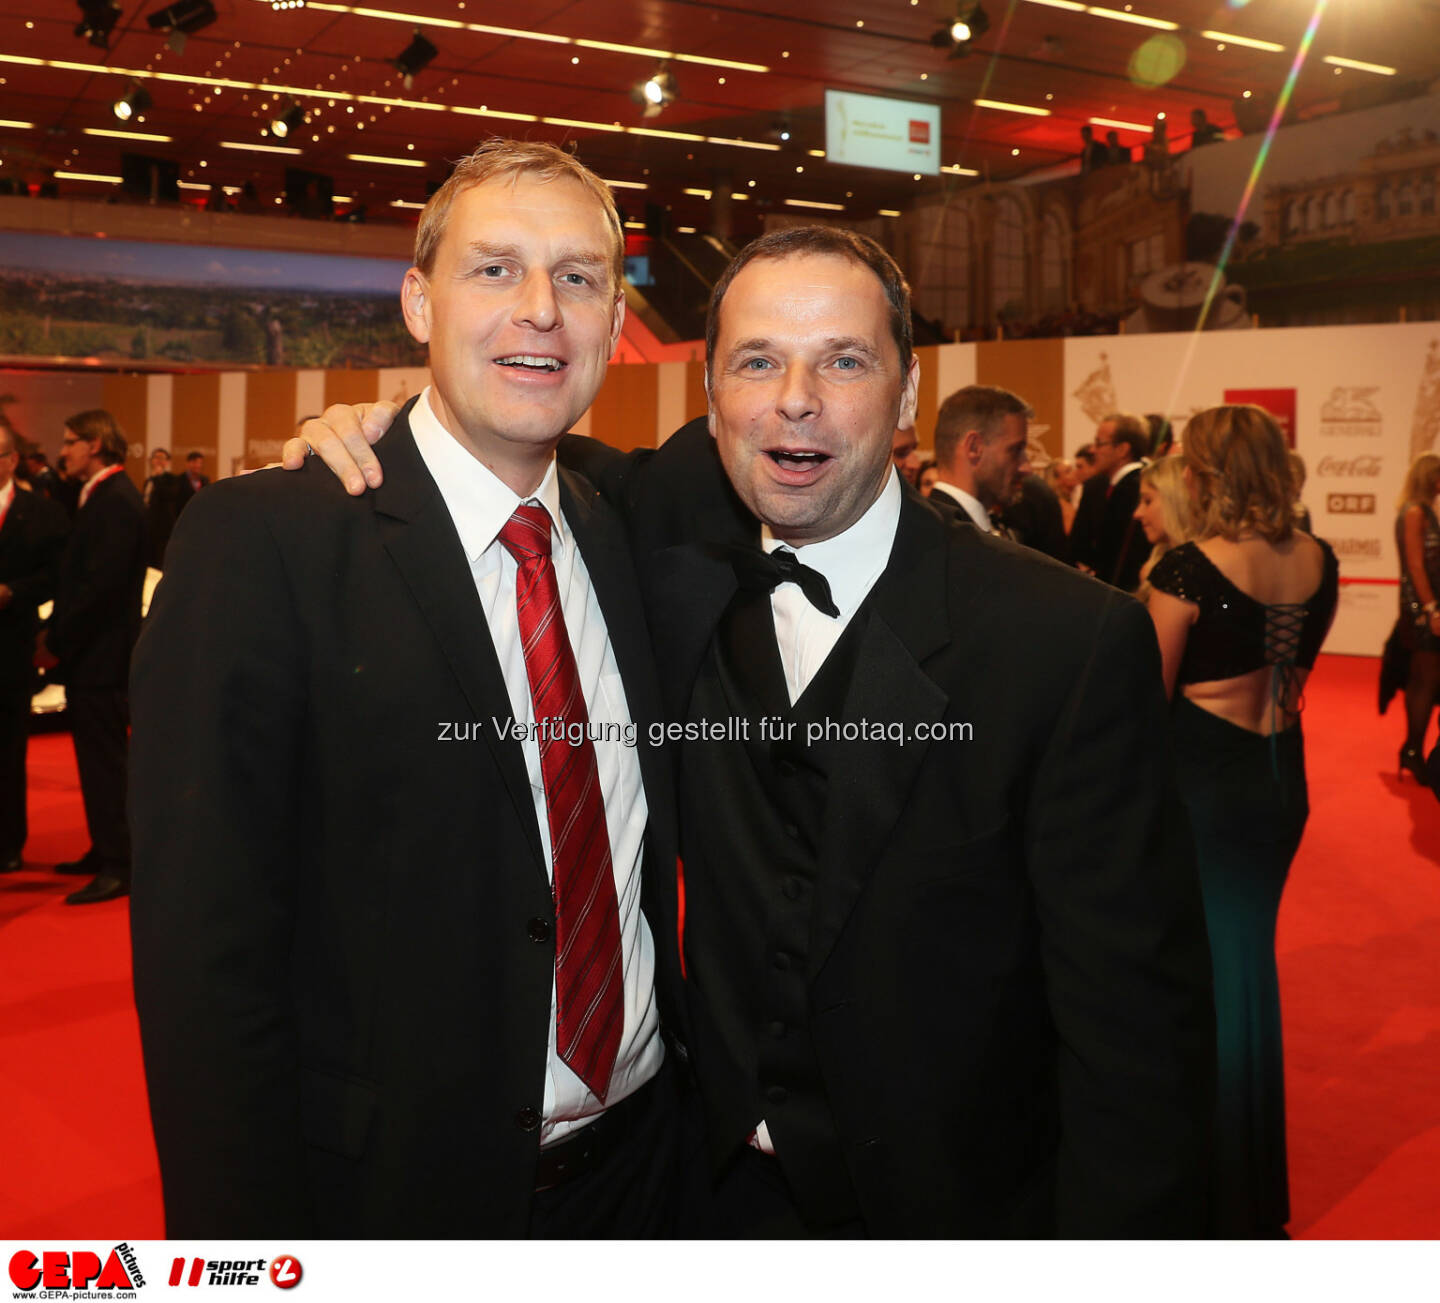 Markus Pichler and Philipp Bodzenta Photo: GEPA pictures/ Hans Oberlaender